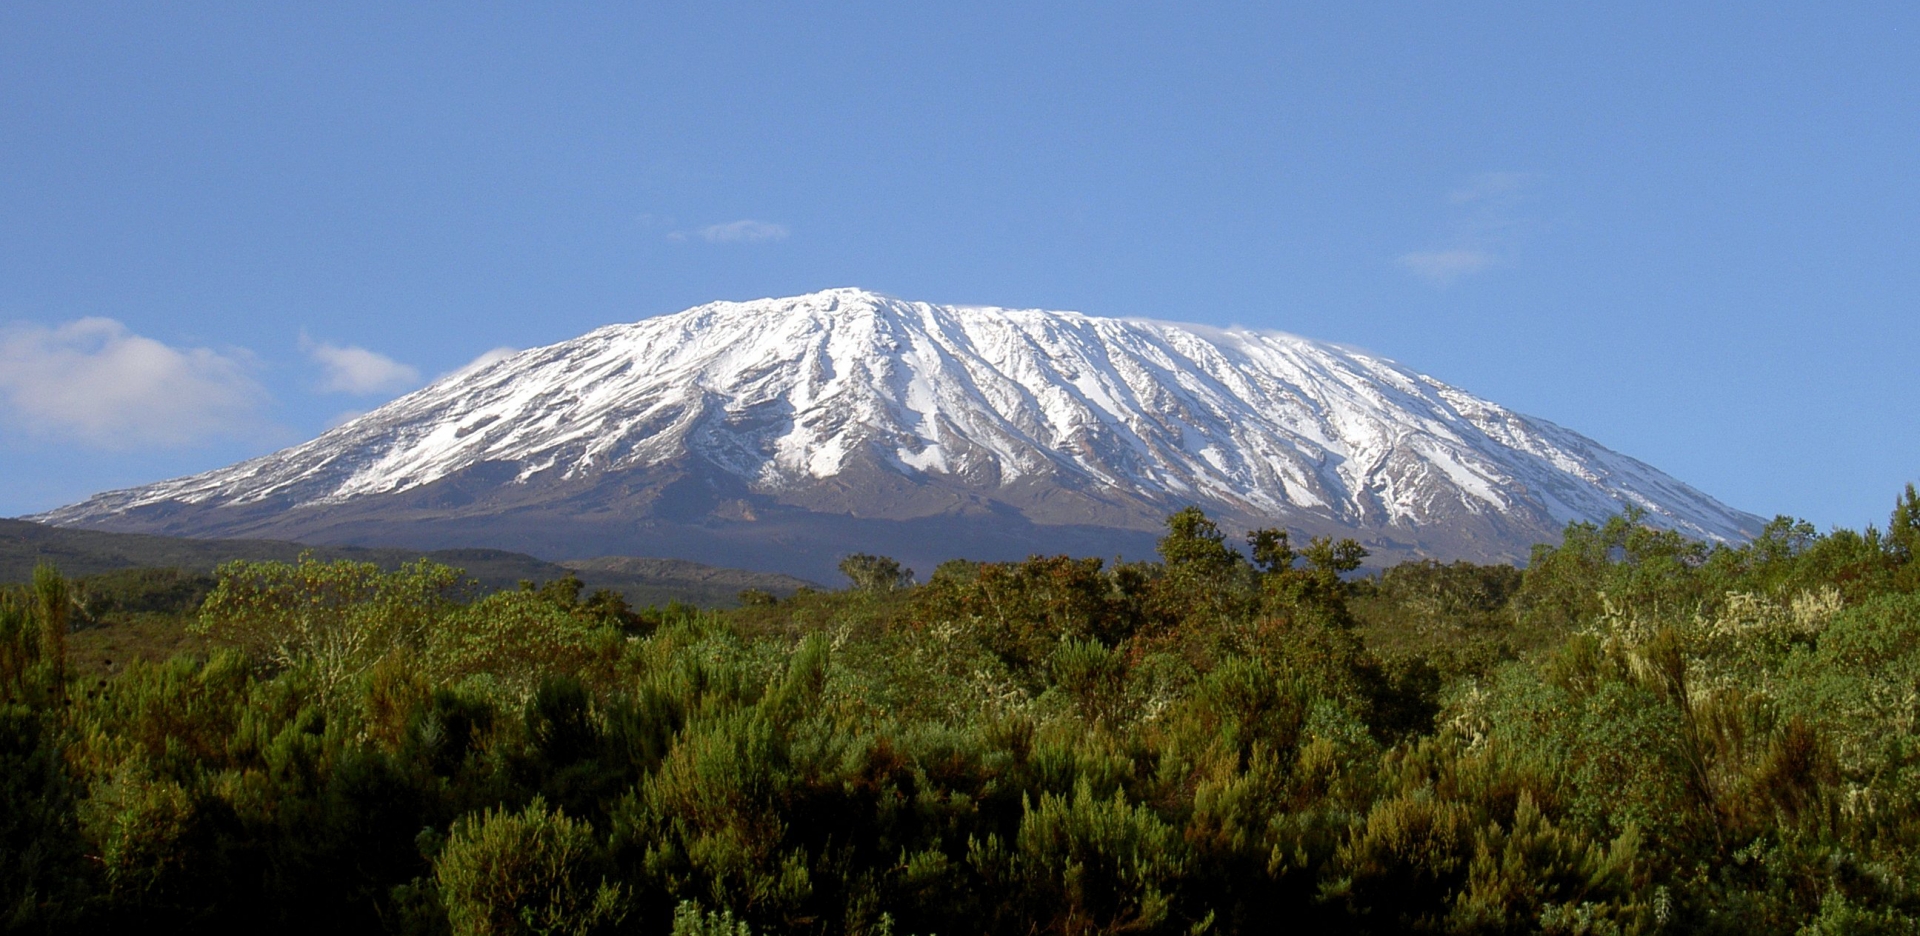 High Resolution Wallpaper | Mount Kilimanjaro 1920x936 px